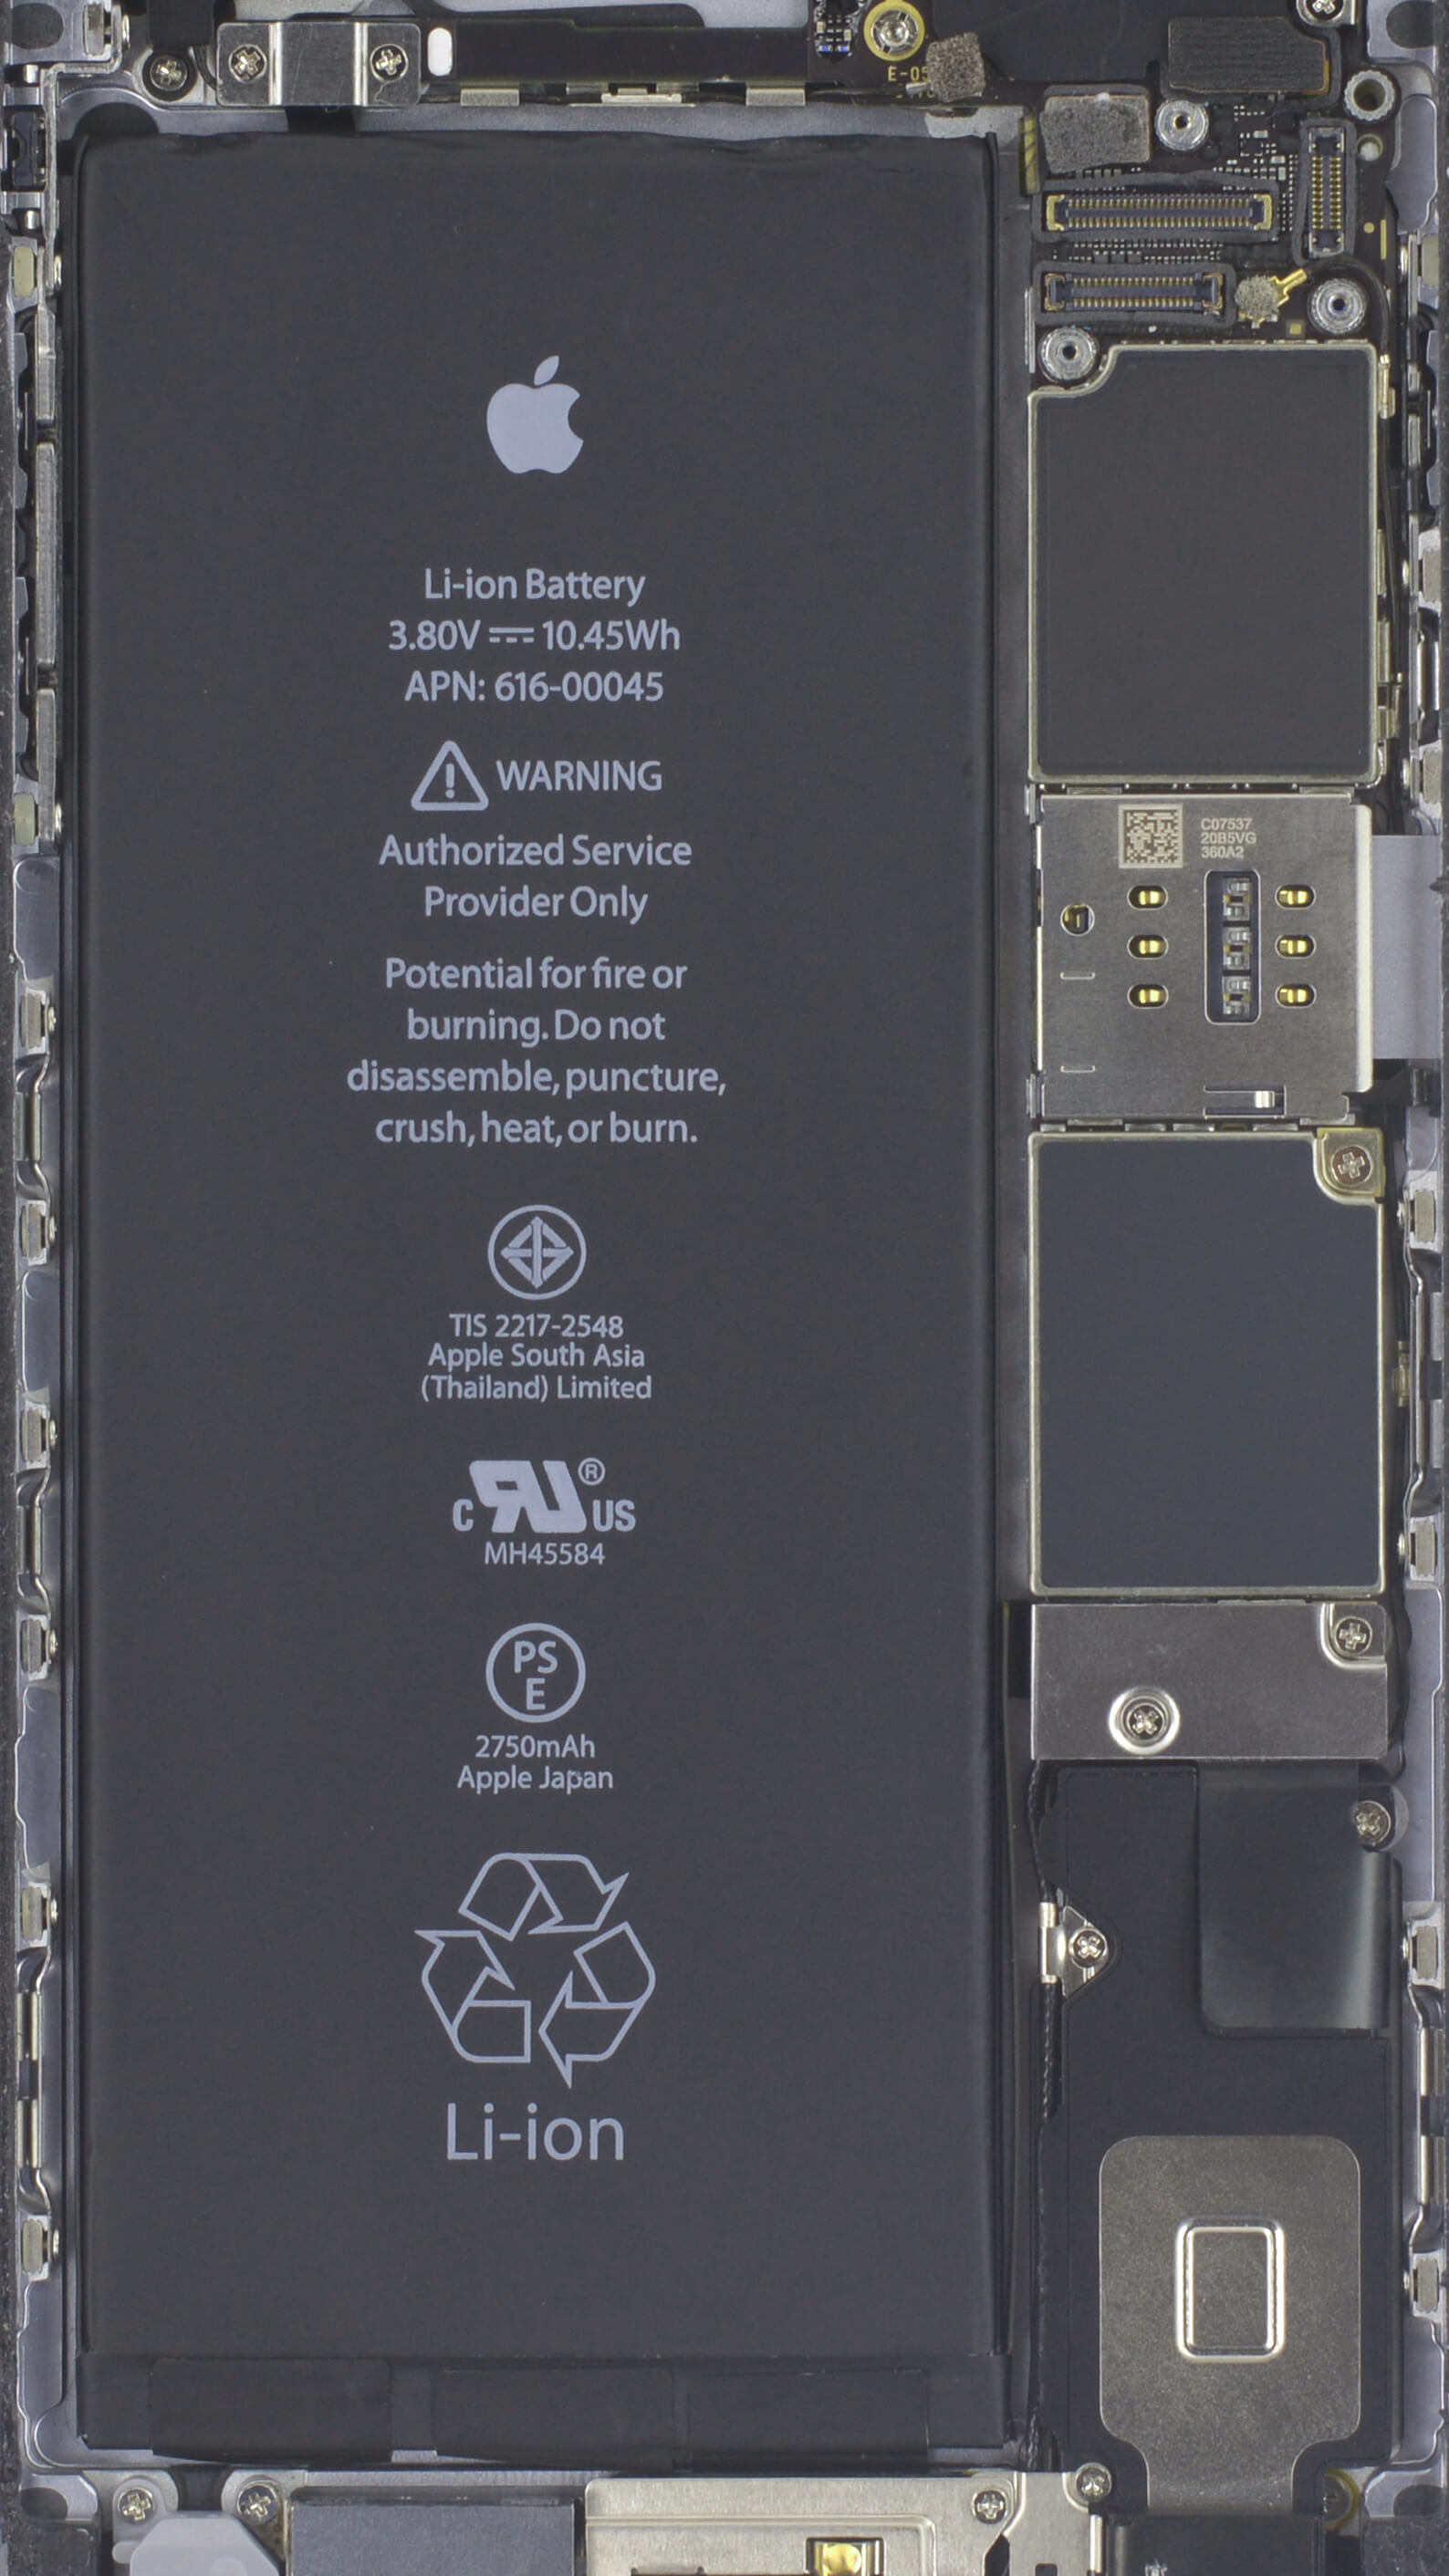 Ốp lưng iPhone 6S Plus giá rẻ